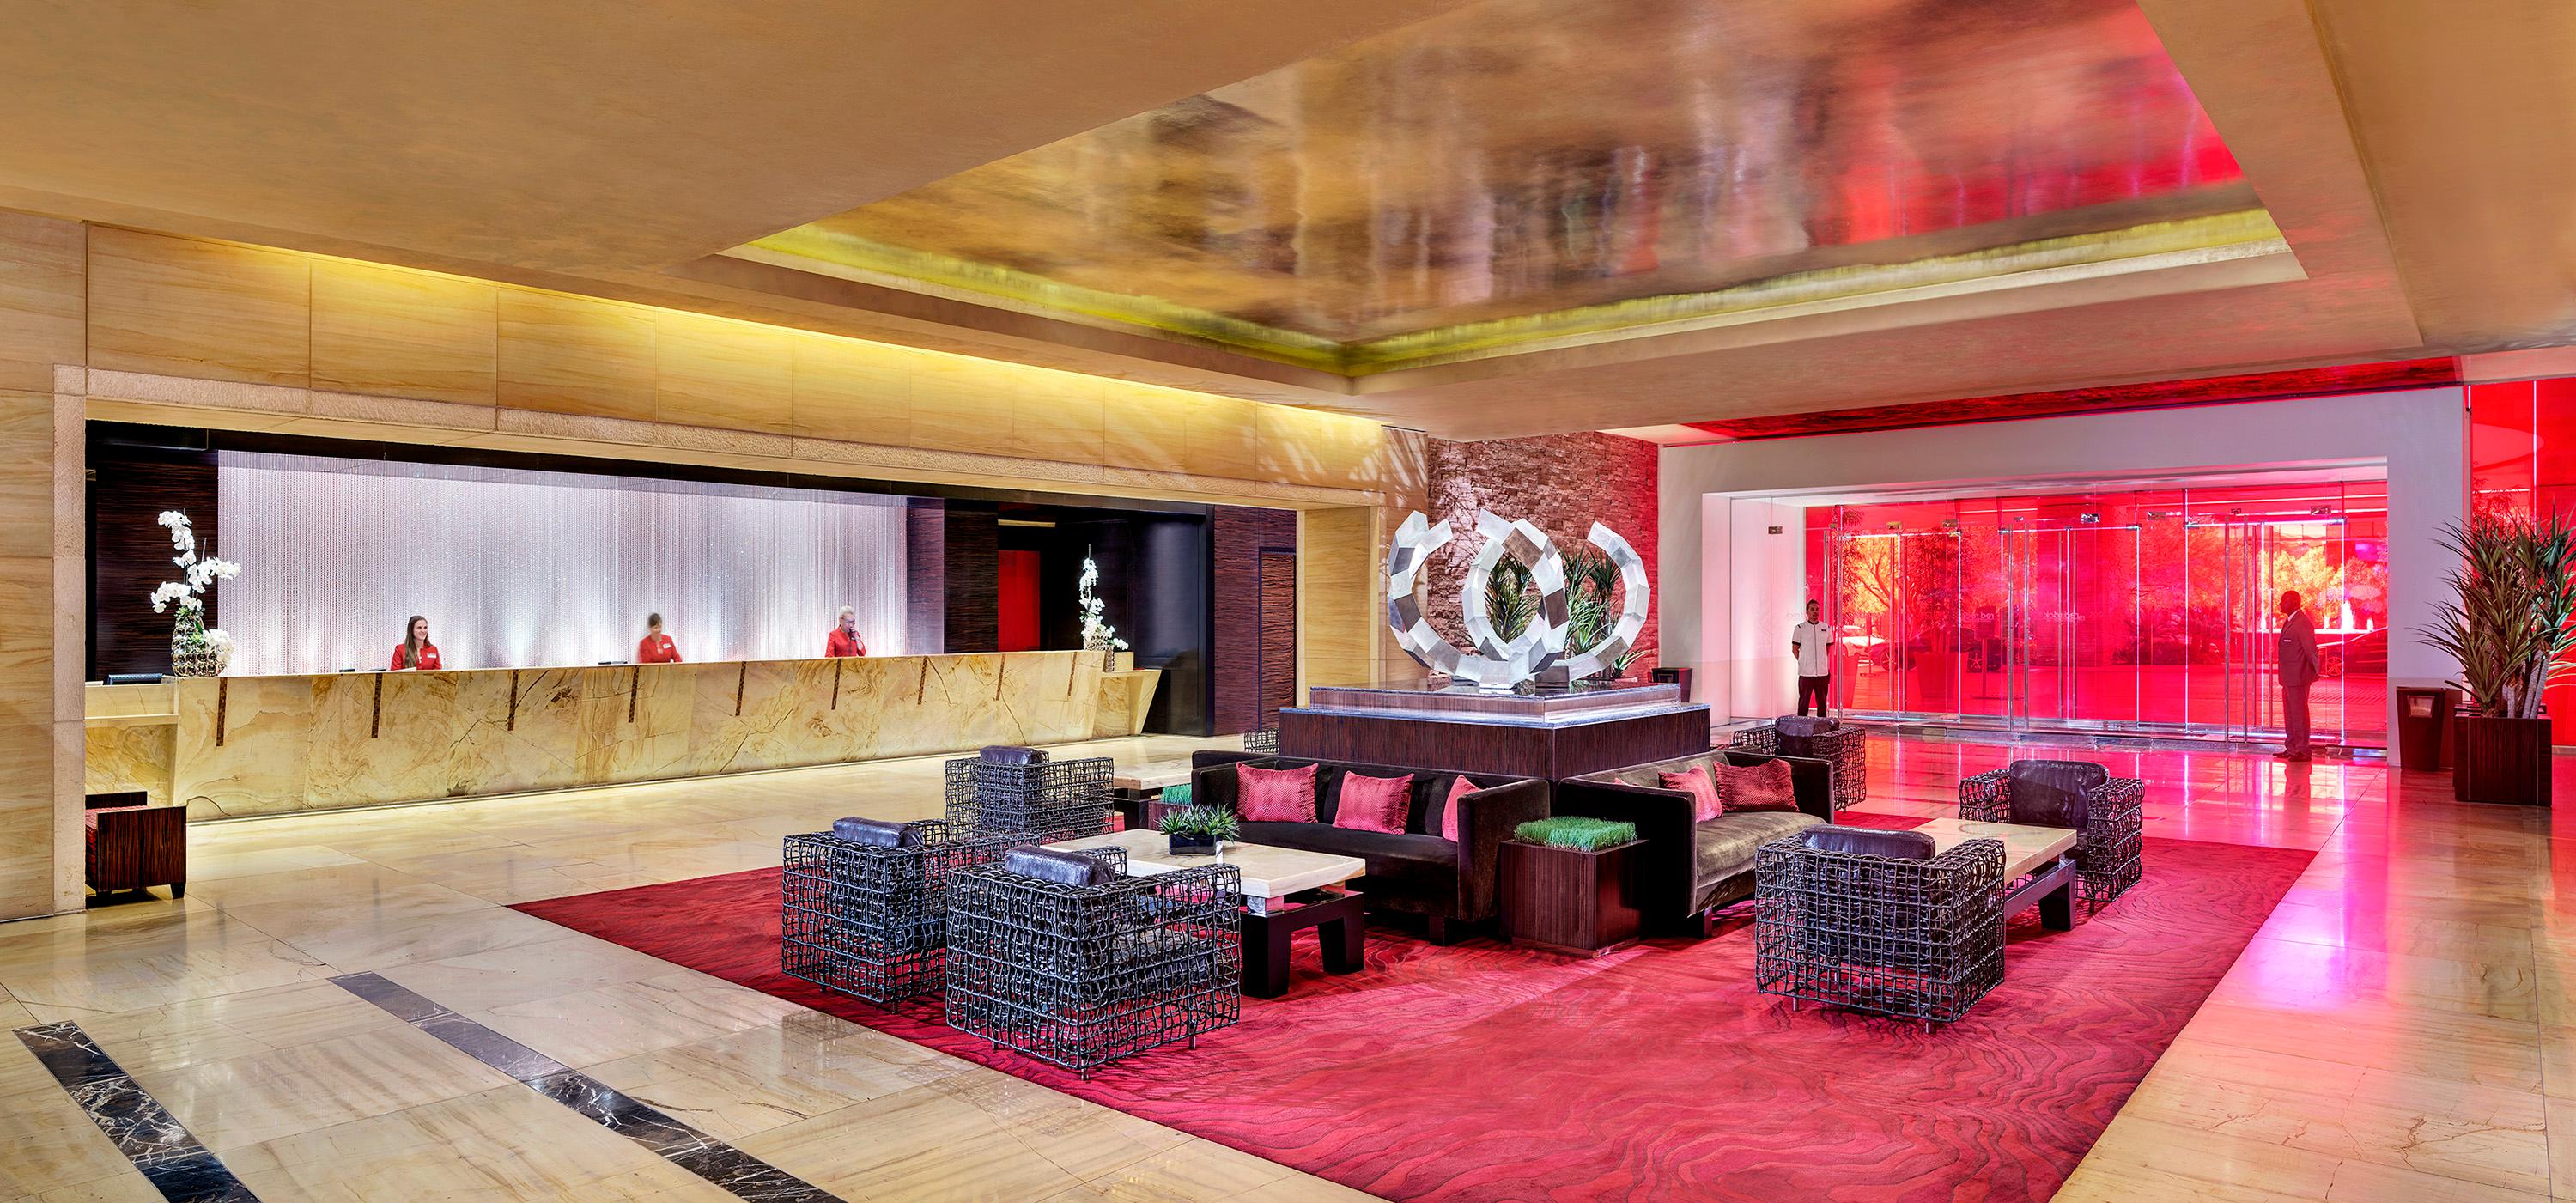 red rock casino resort spa pavilion ballroom